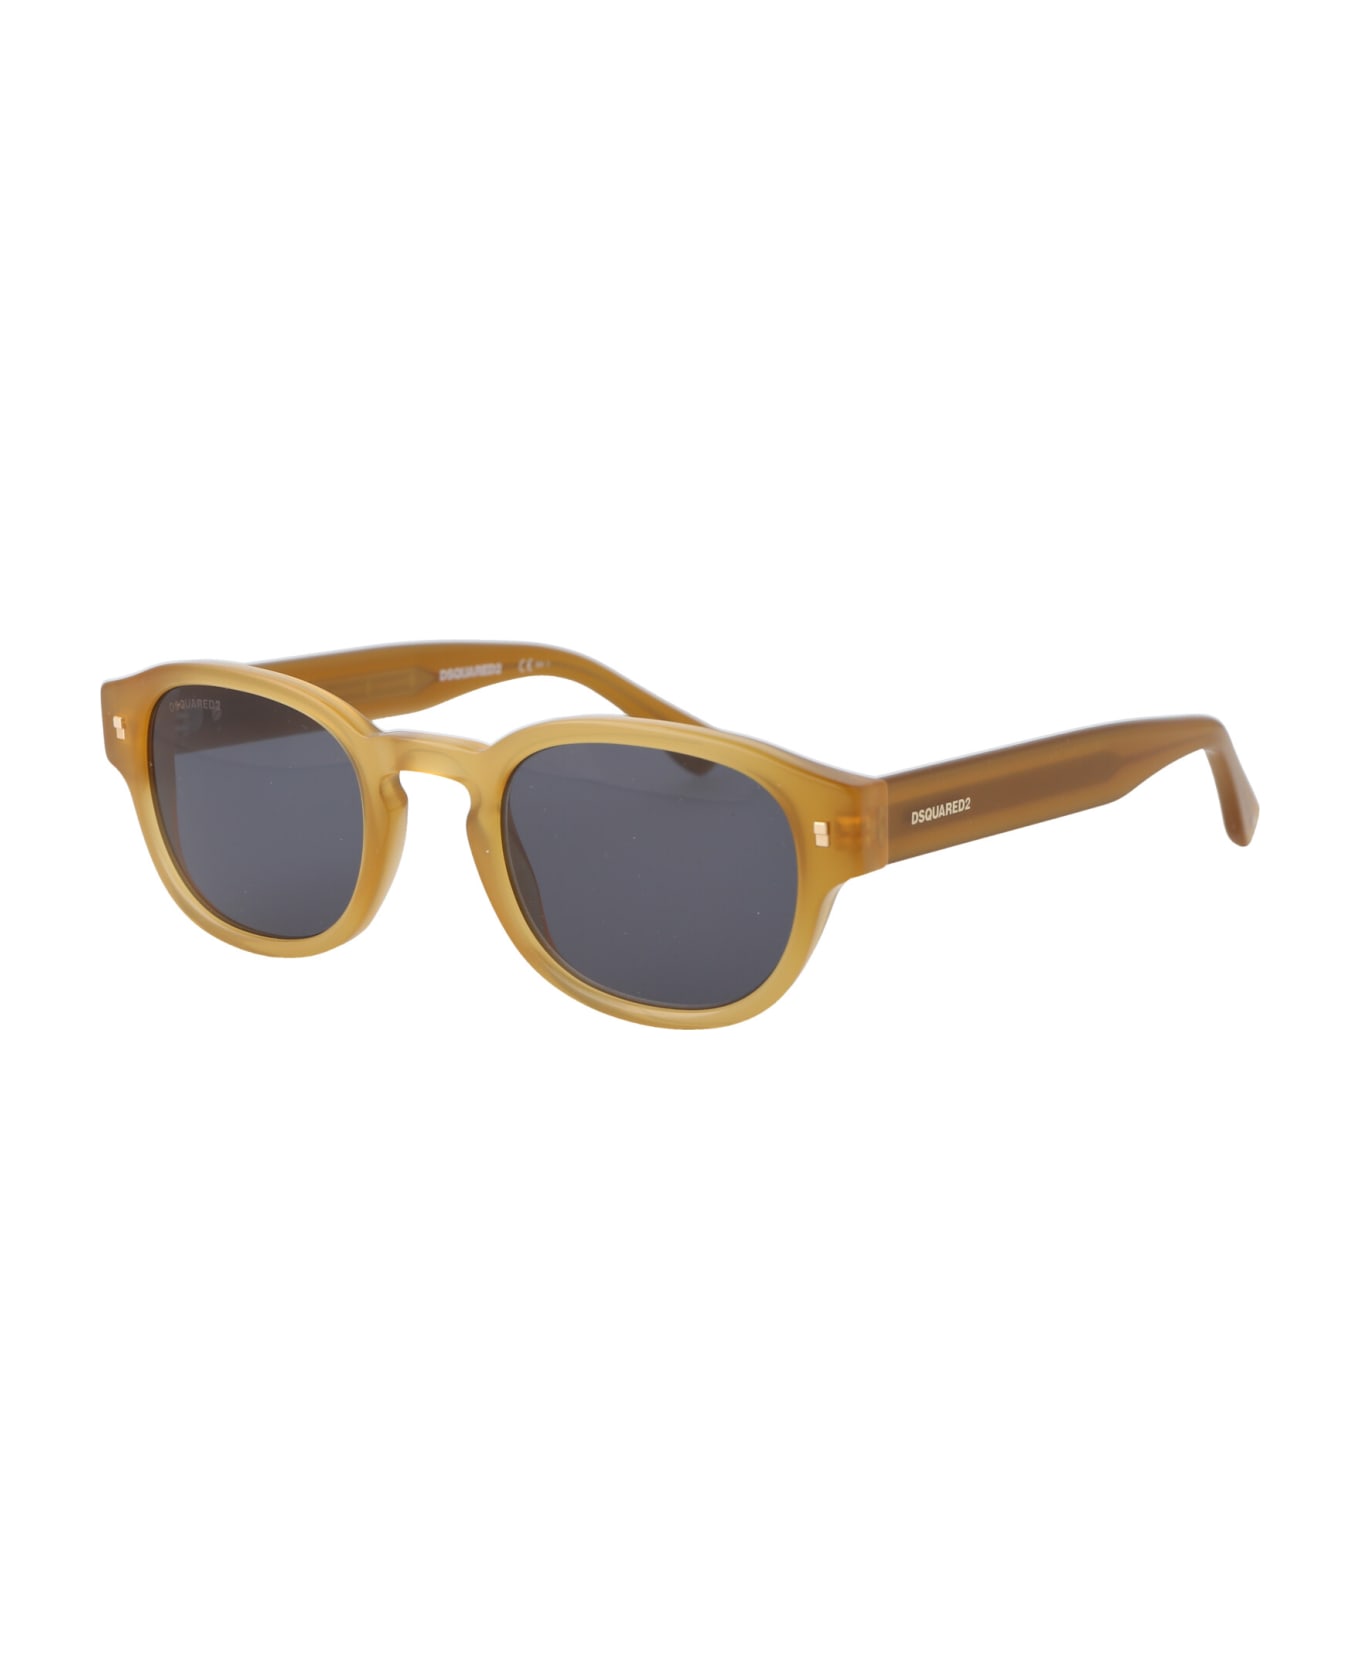 Dsquared2 Eyewear D2 0014/s Sunglasses - SL 538 002 SUNGLASSES